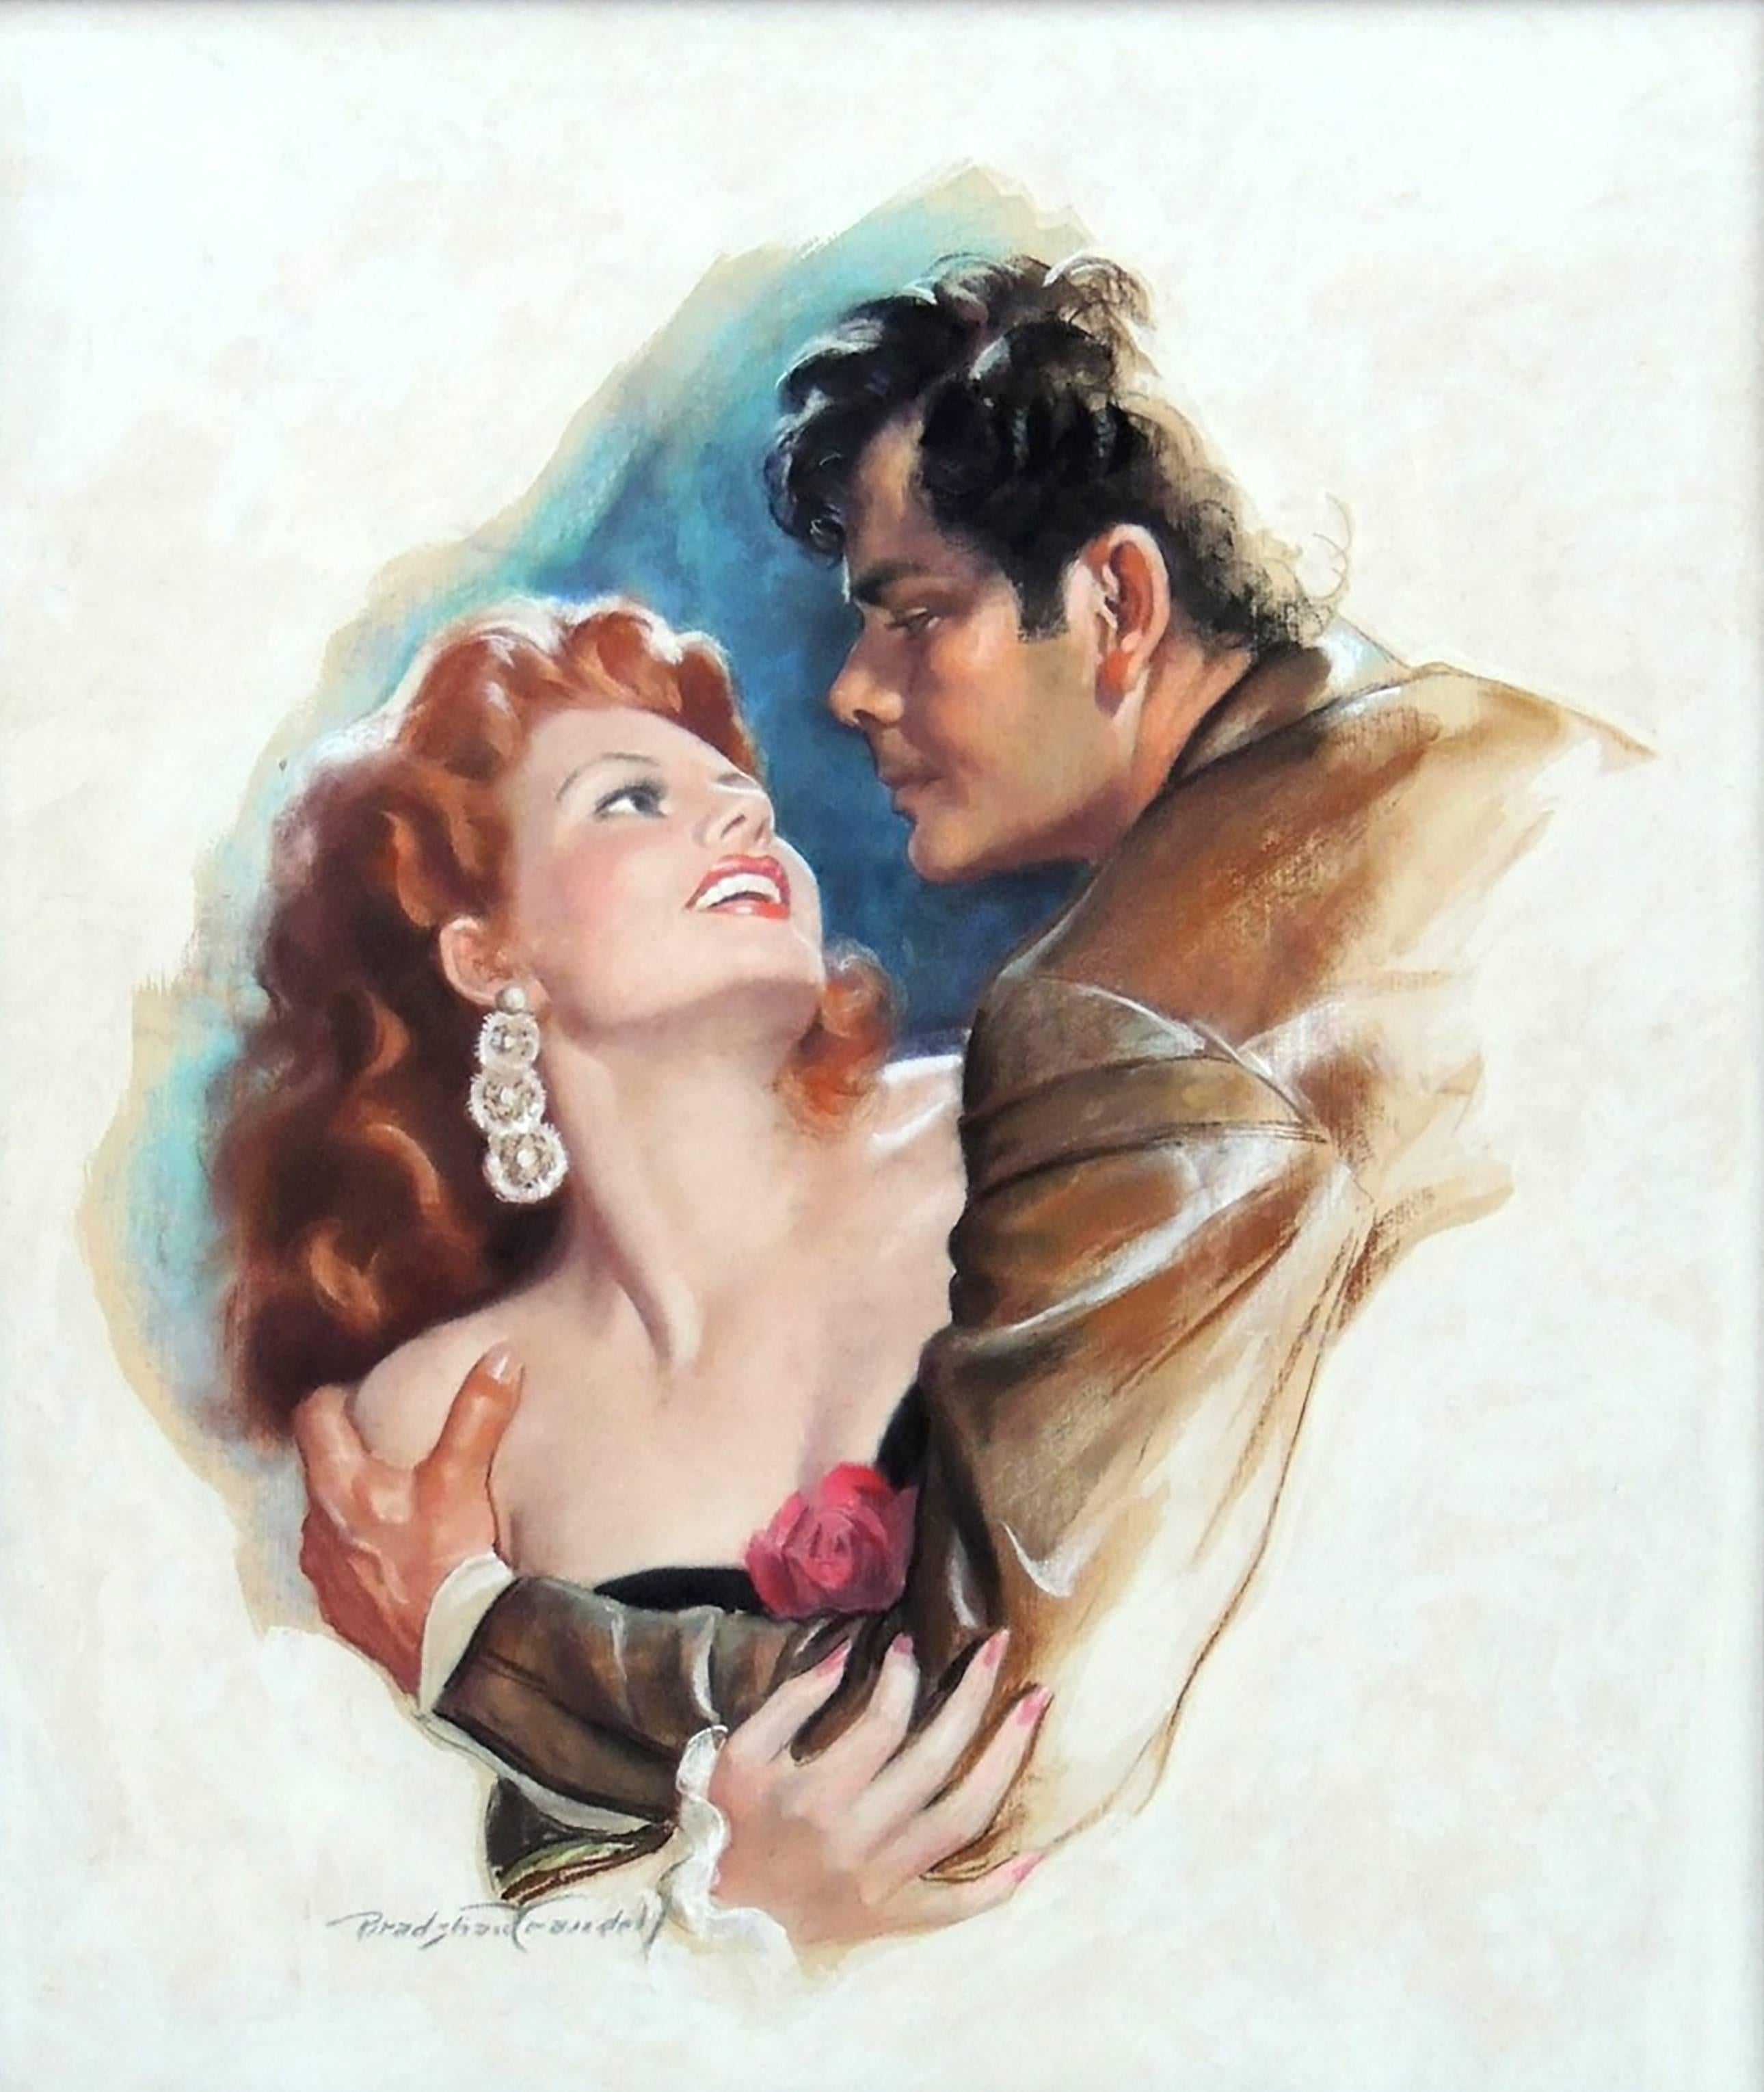 Bradshaw Crandell Portrait - Rita Hayworth & Glen Ford, Movie Poster Illustration